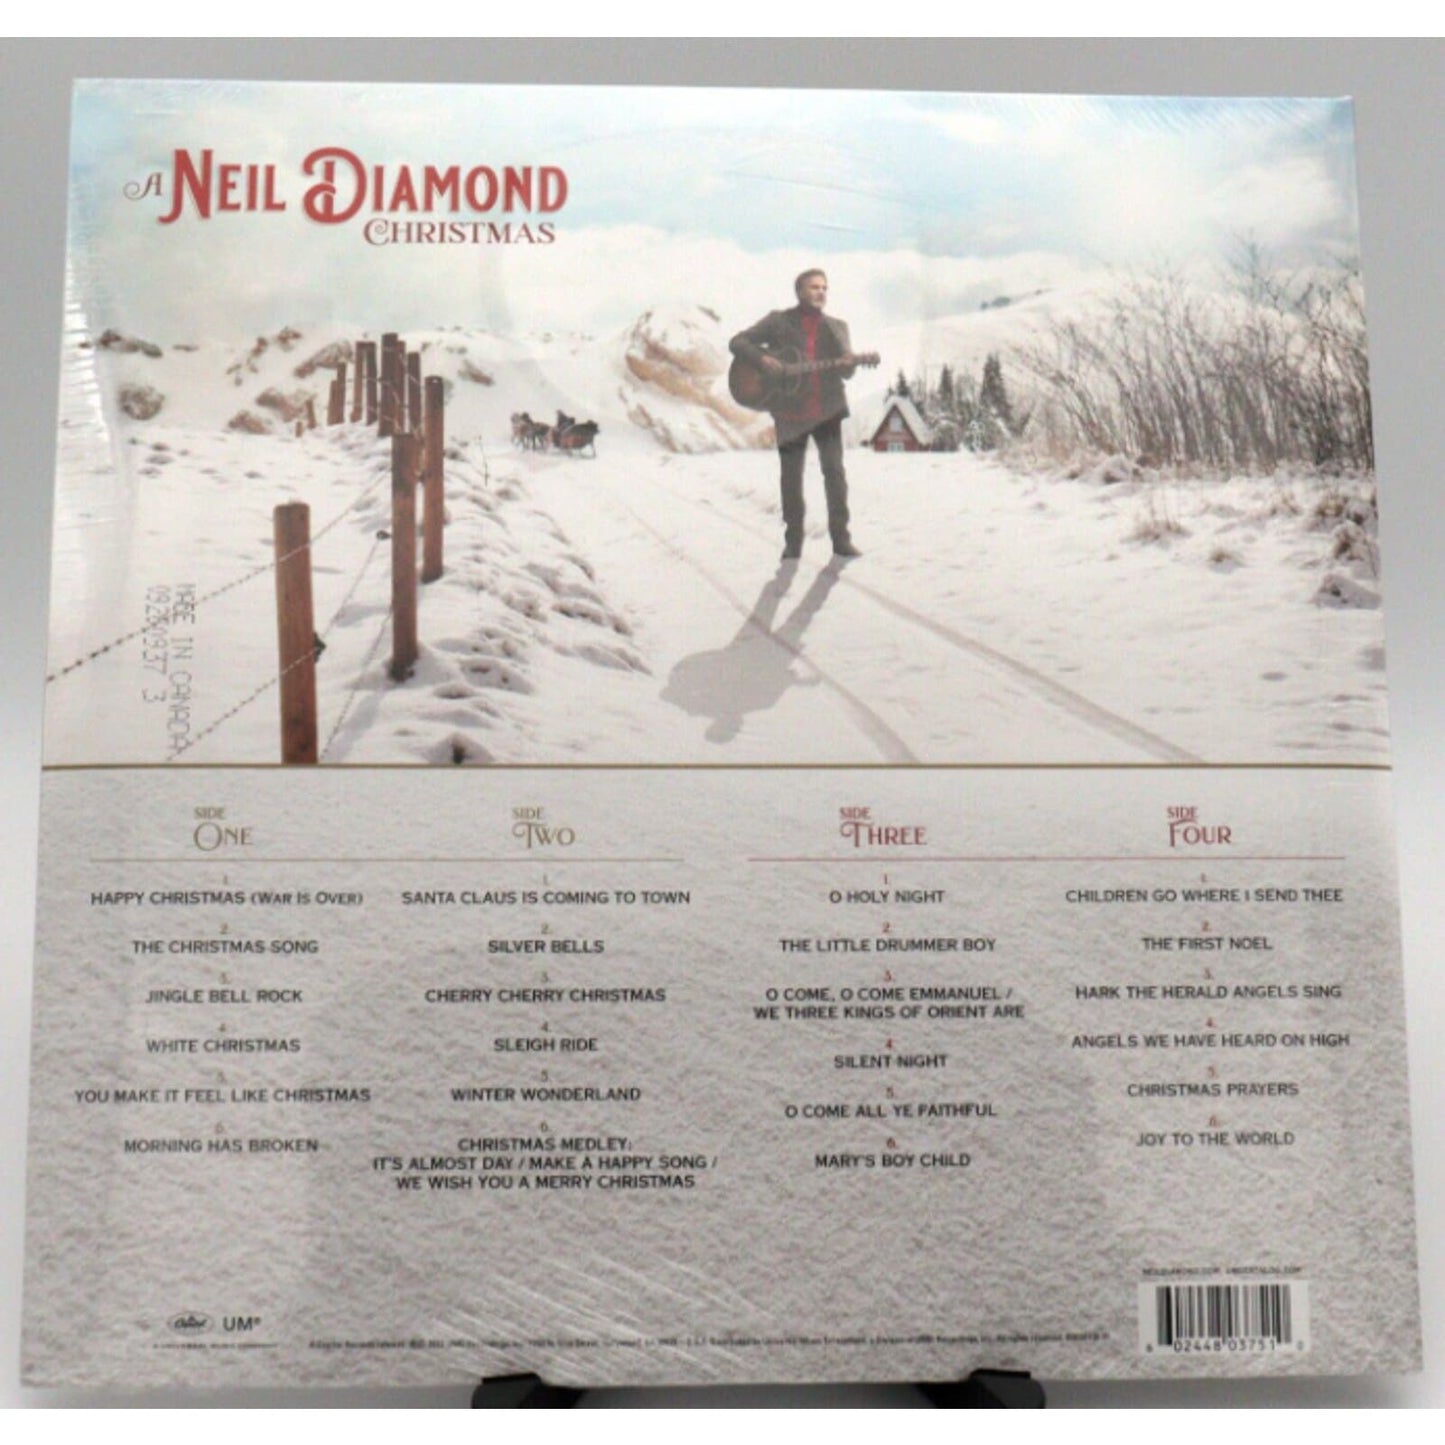 Neil Diamond - A Neil Diamond Christmas (2 LP) (Vinyl)